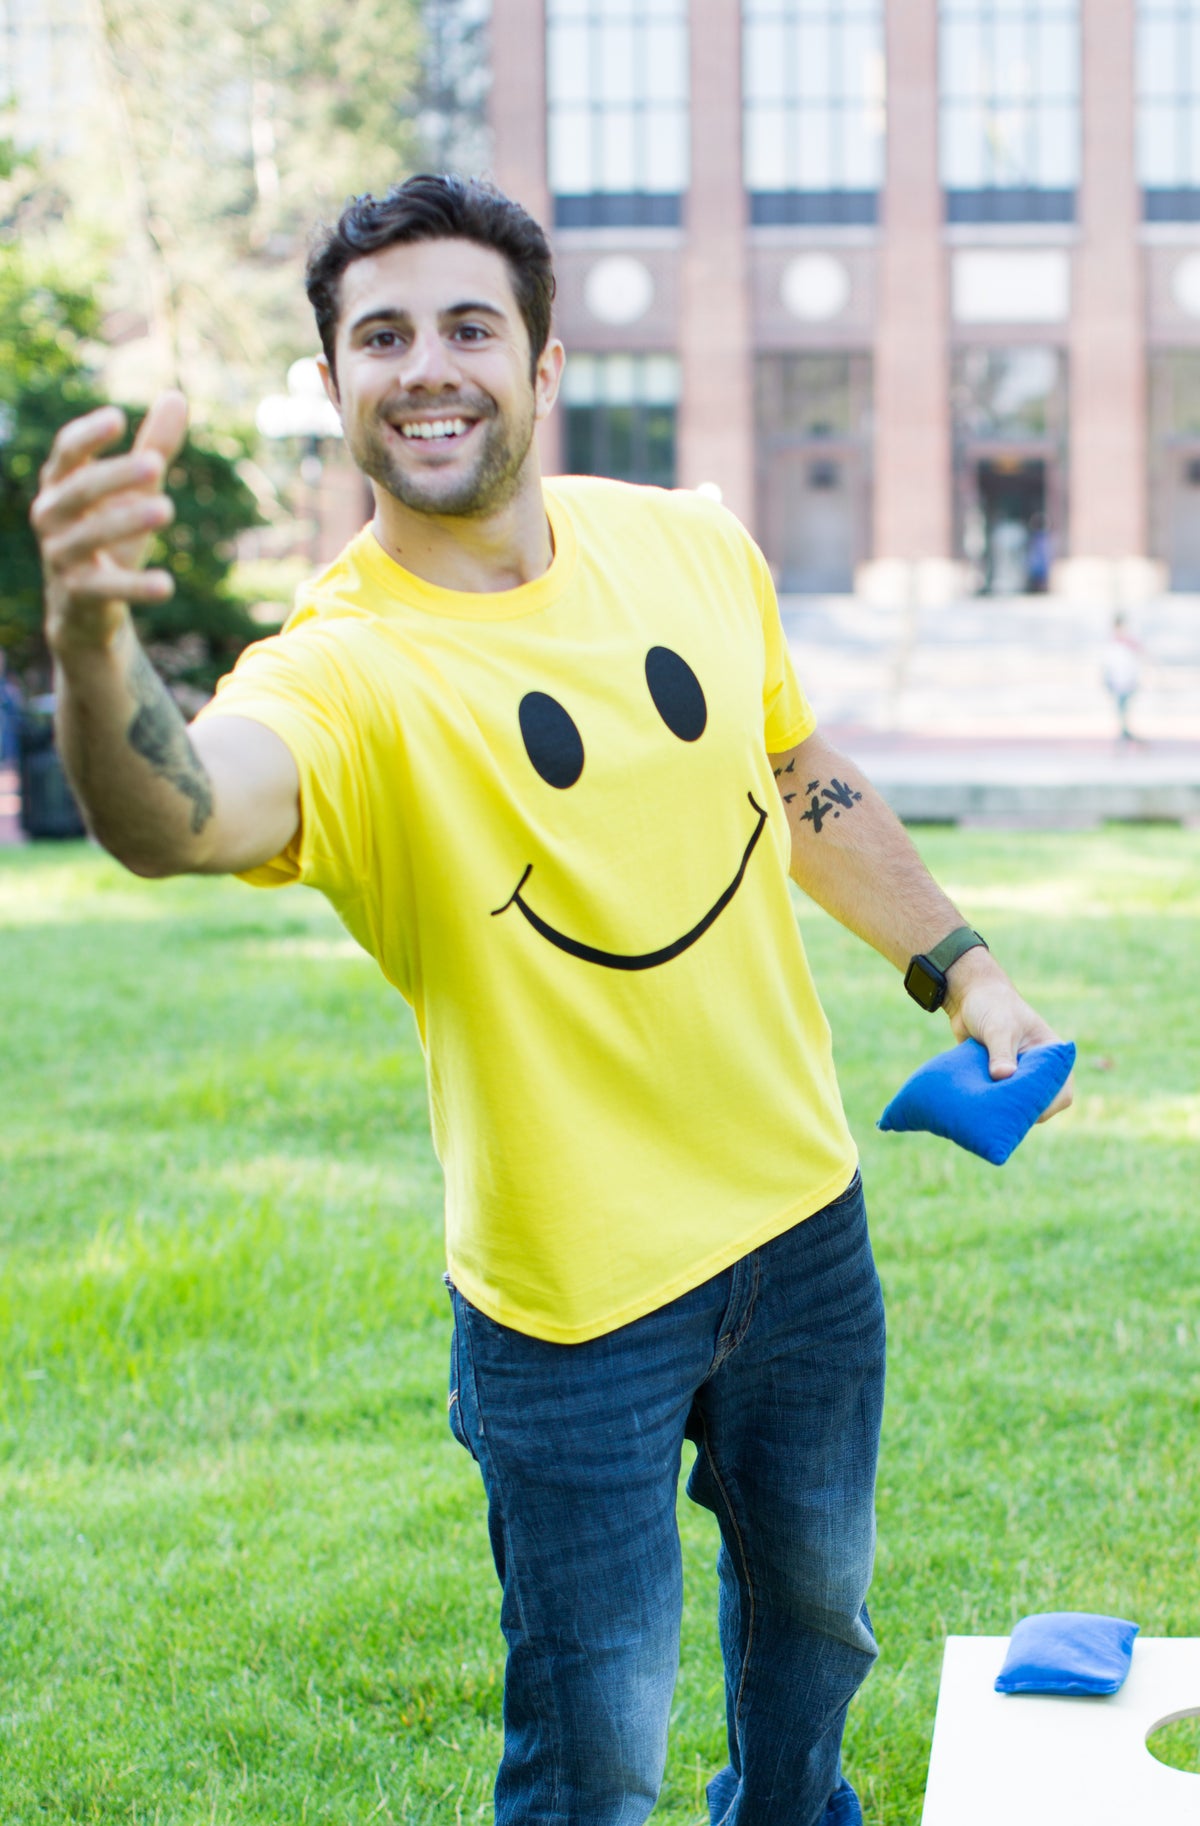 Smile Face - Cute, Smiley Positive, Happy Smiling Face Optimist Fun T-shirt